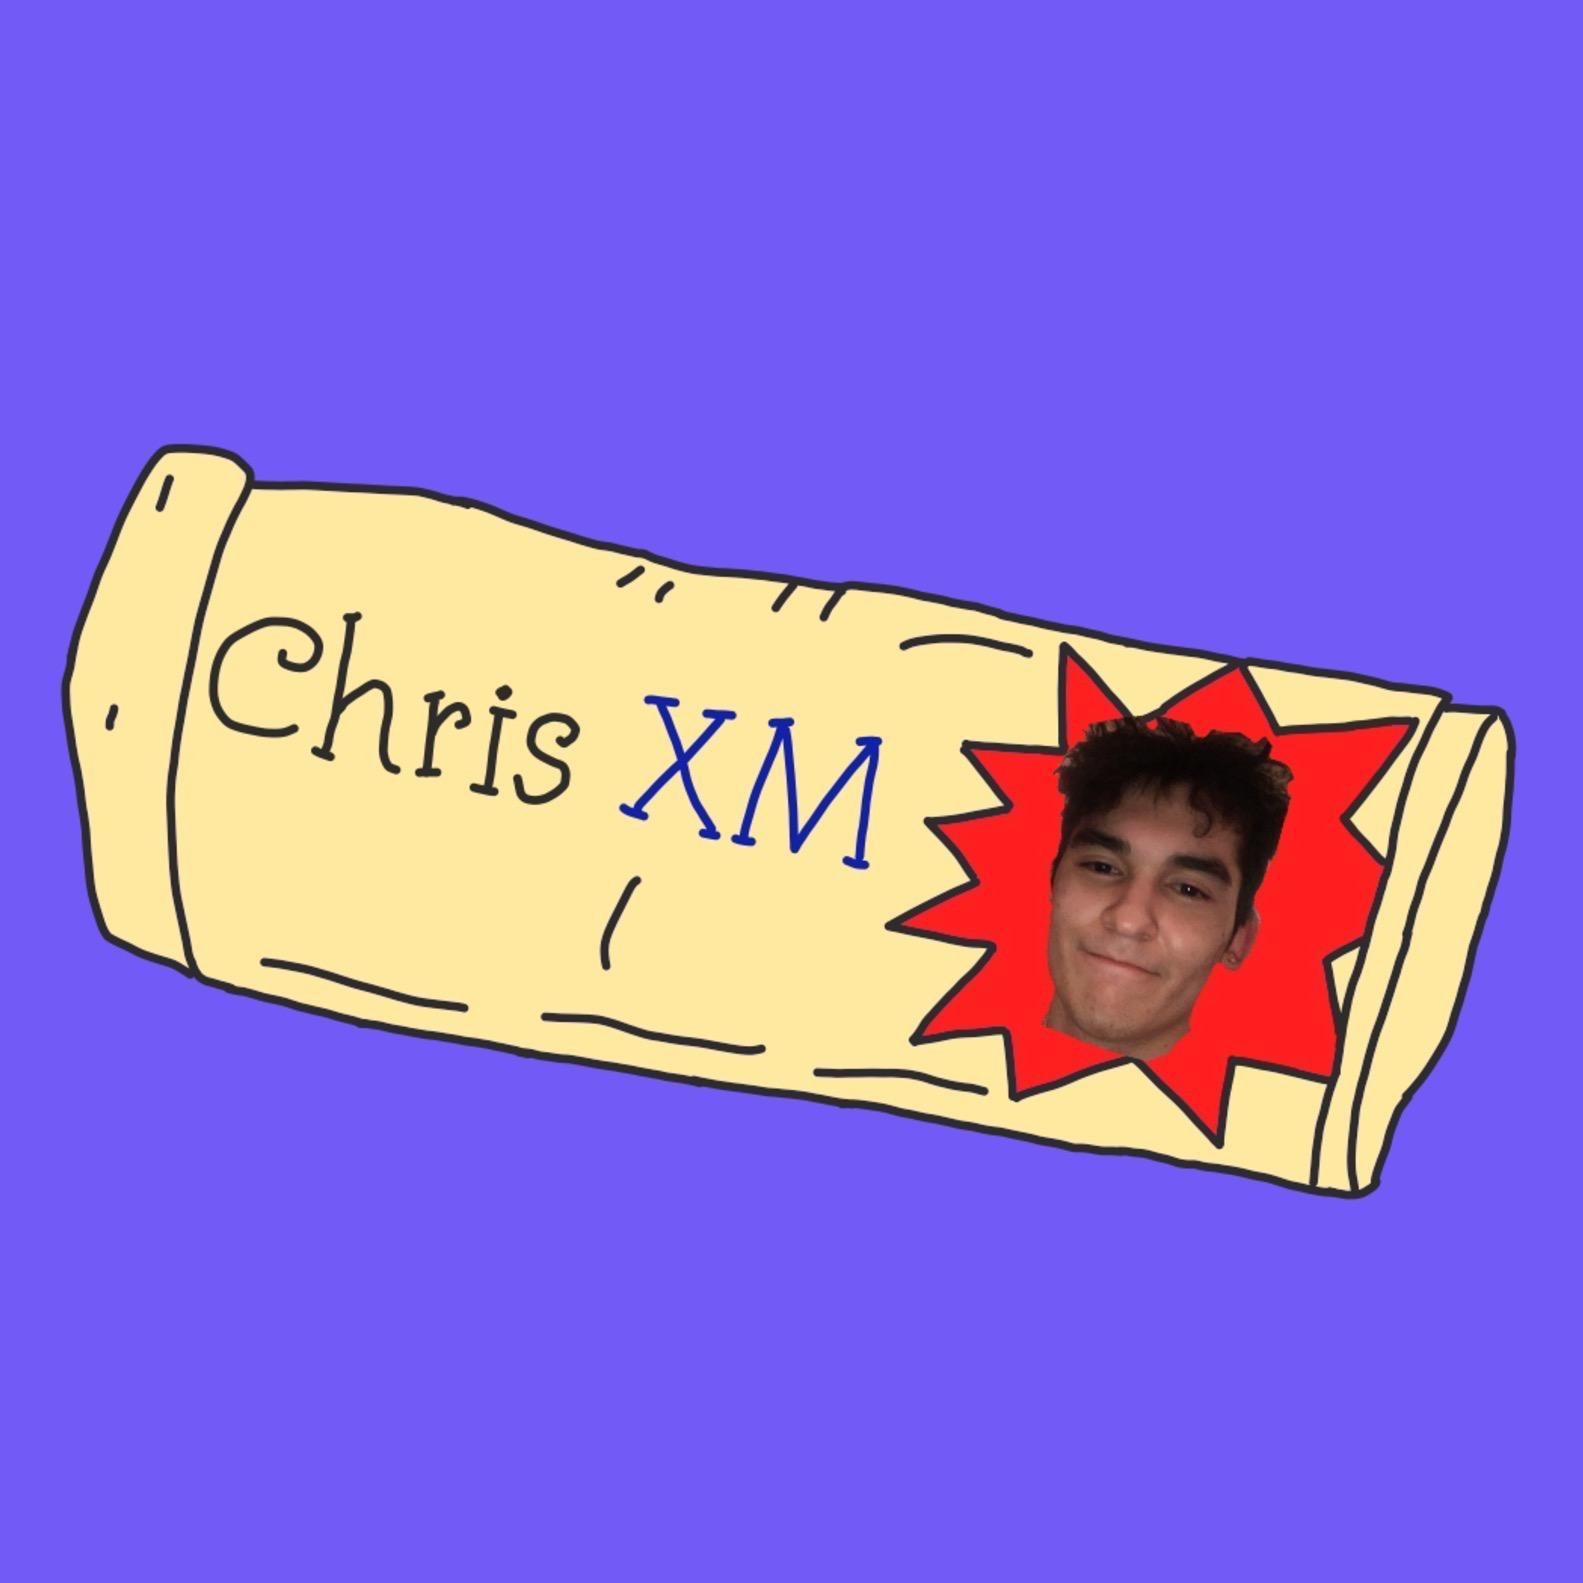 Chris XM